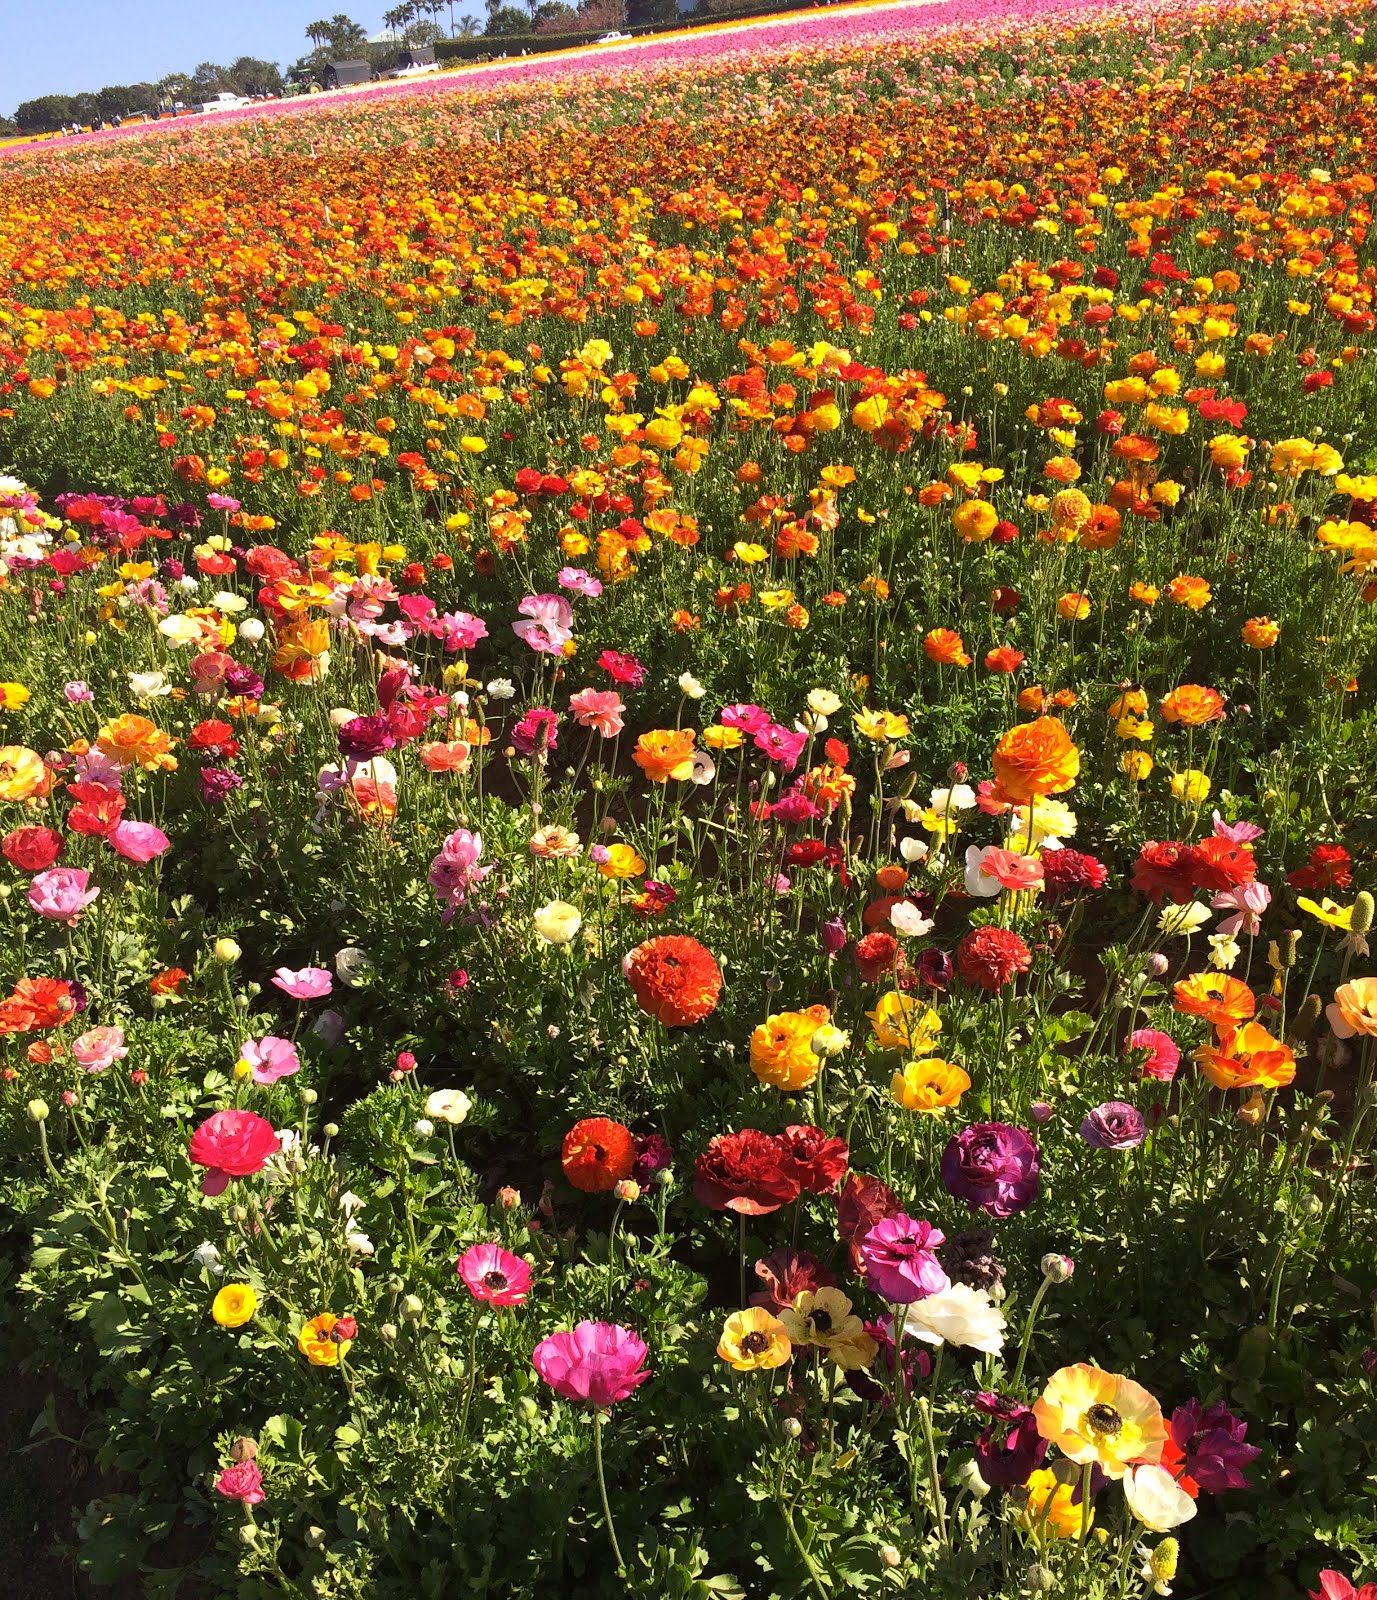 Culver City P.O.: Carlsbad Flower Fields